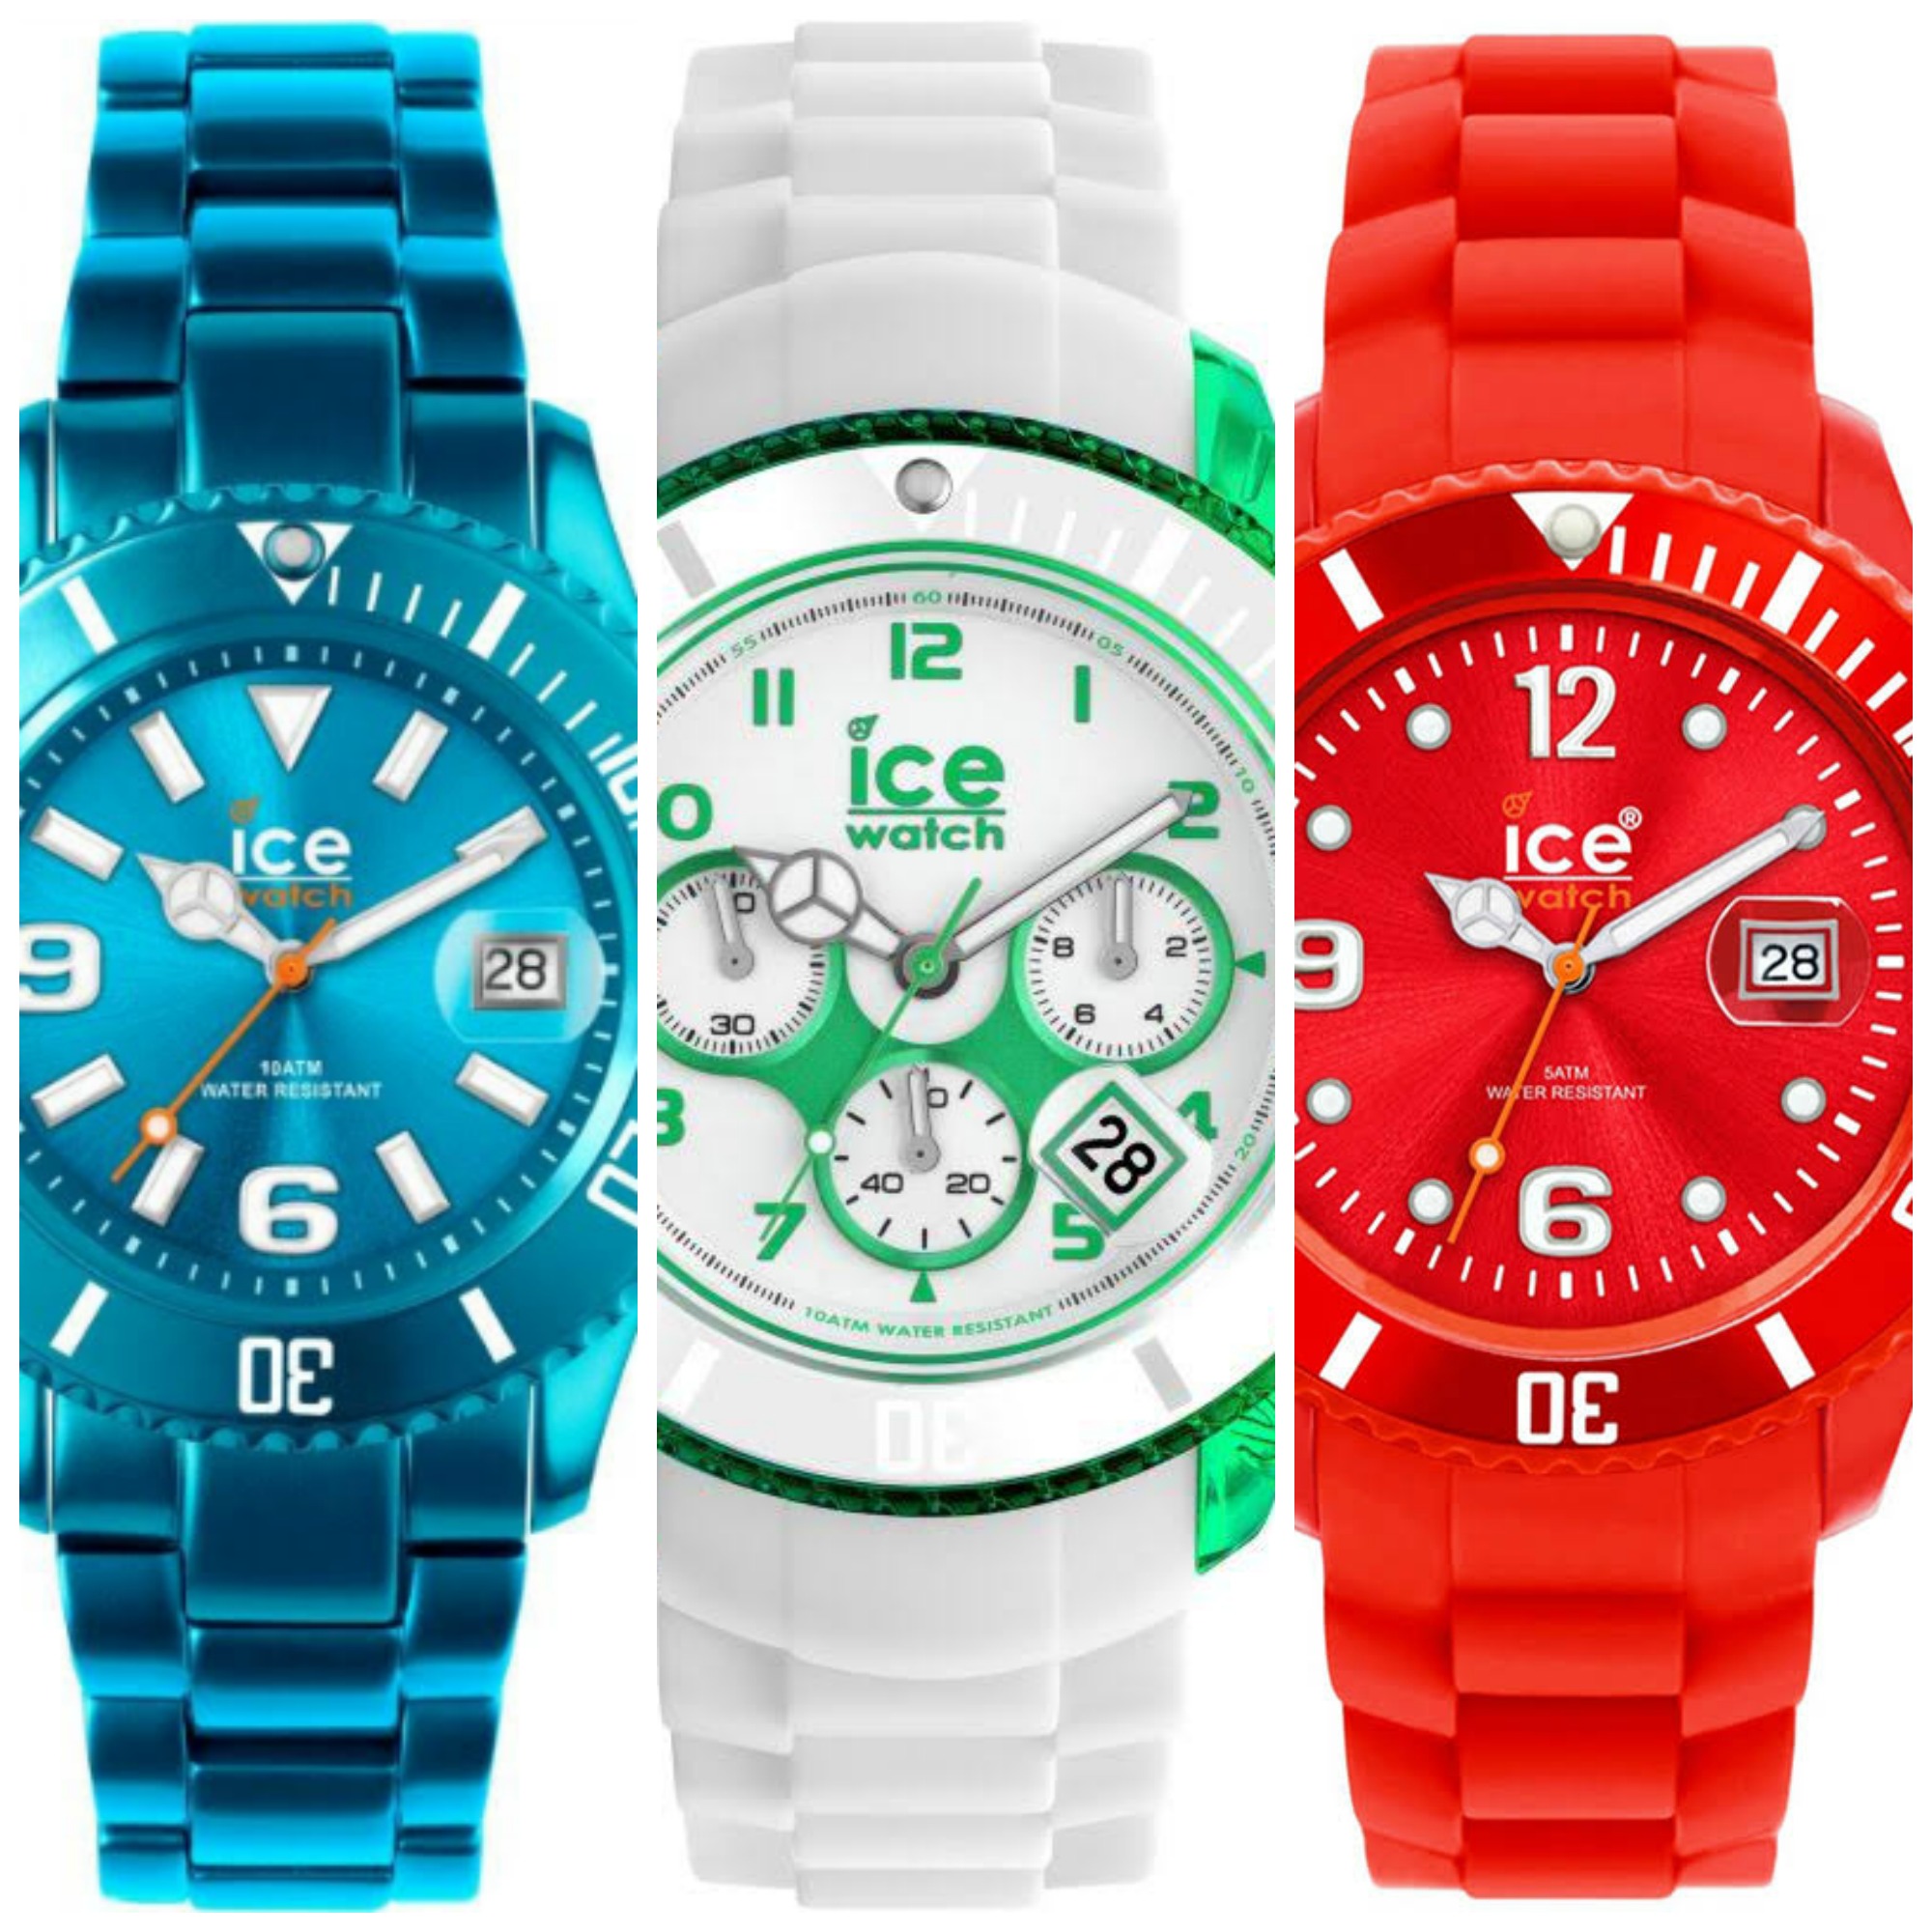 Ice watch часы. Айс вотч. Зеленые часы Ice. Часы Ice watch. Ice watch брелок.